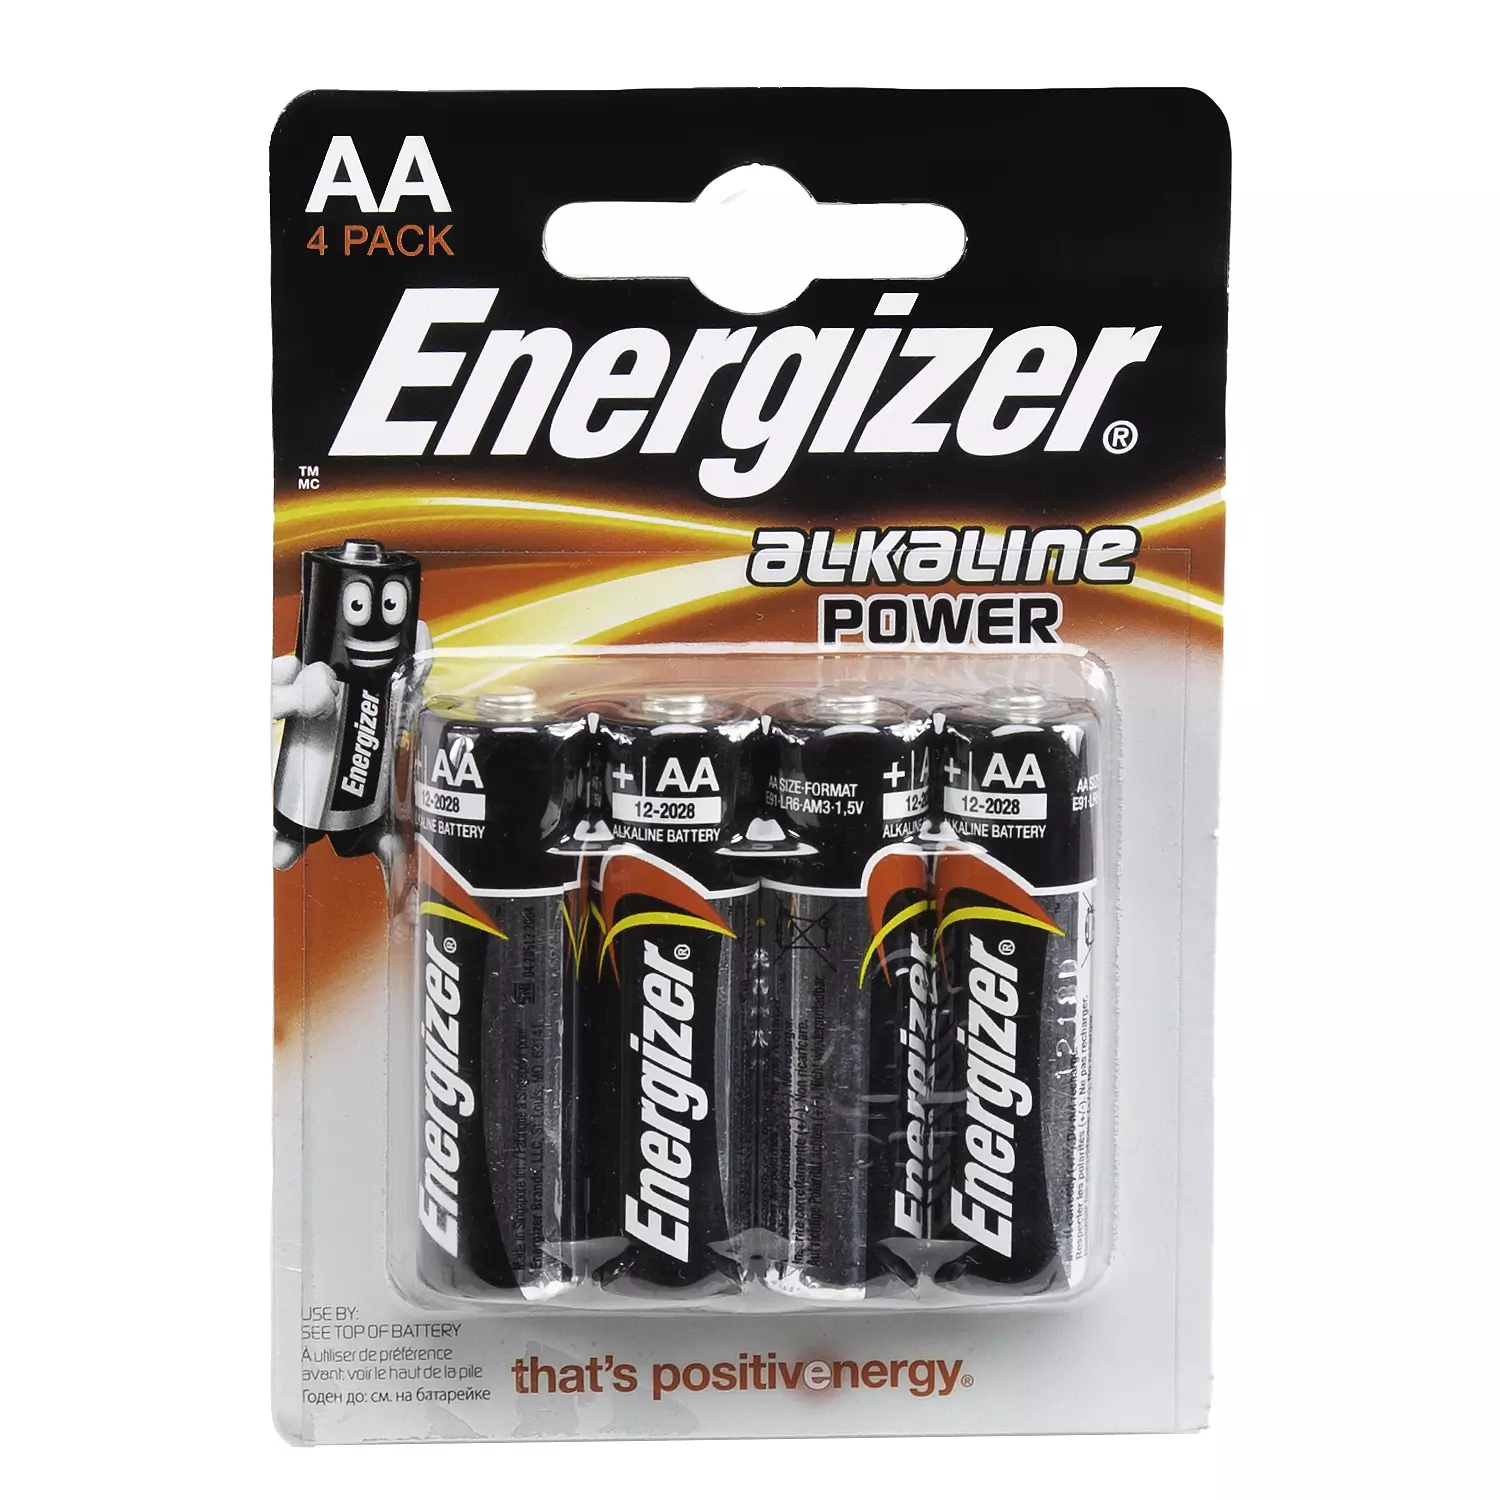 Energizer - Alkaline power AA batteries, pk. of 4